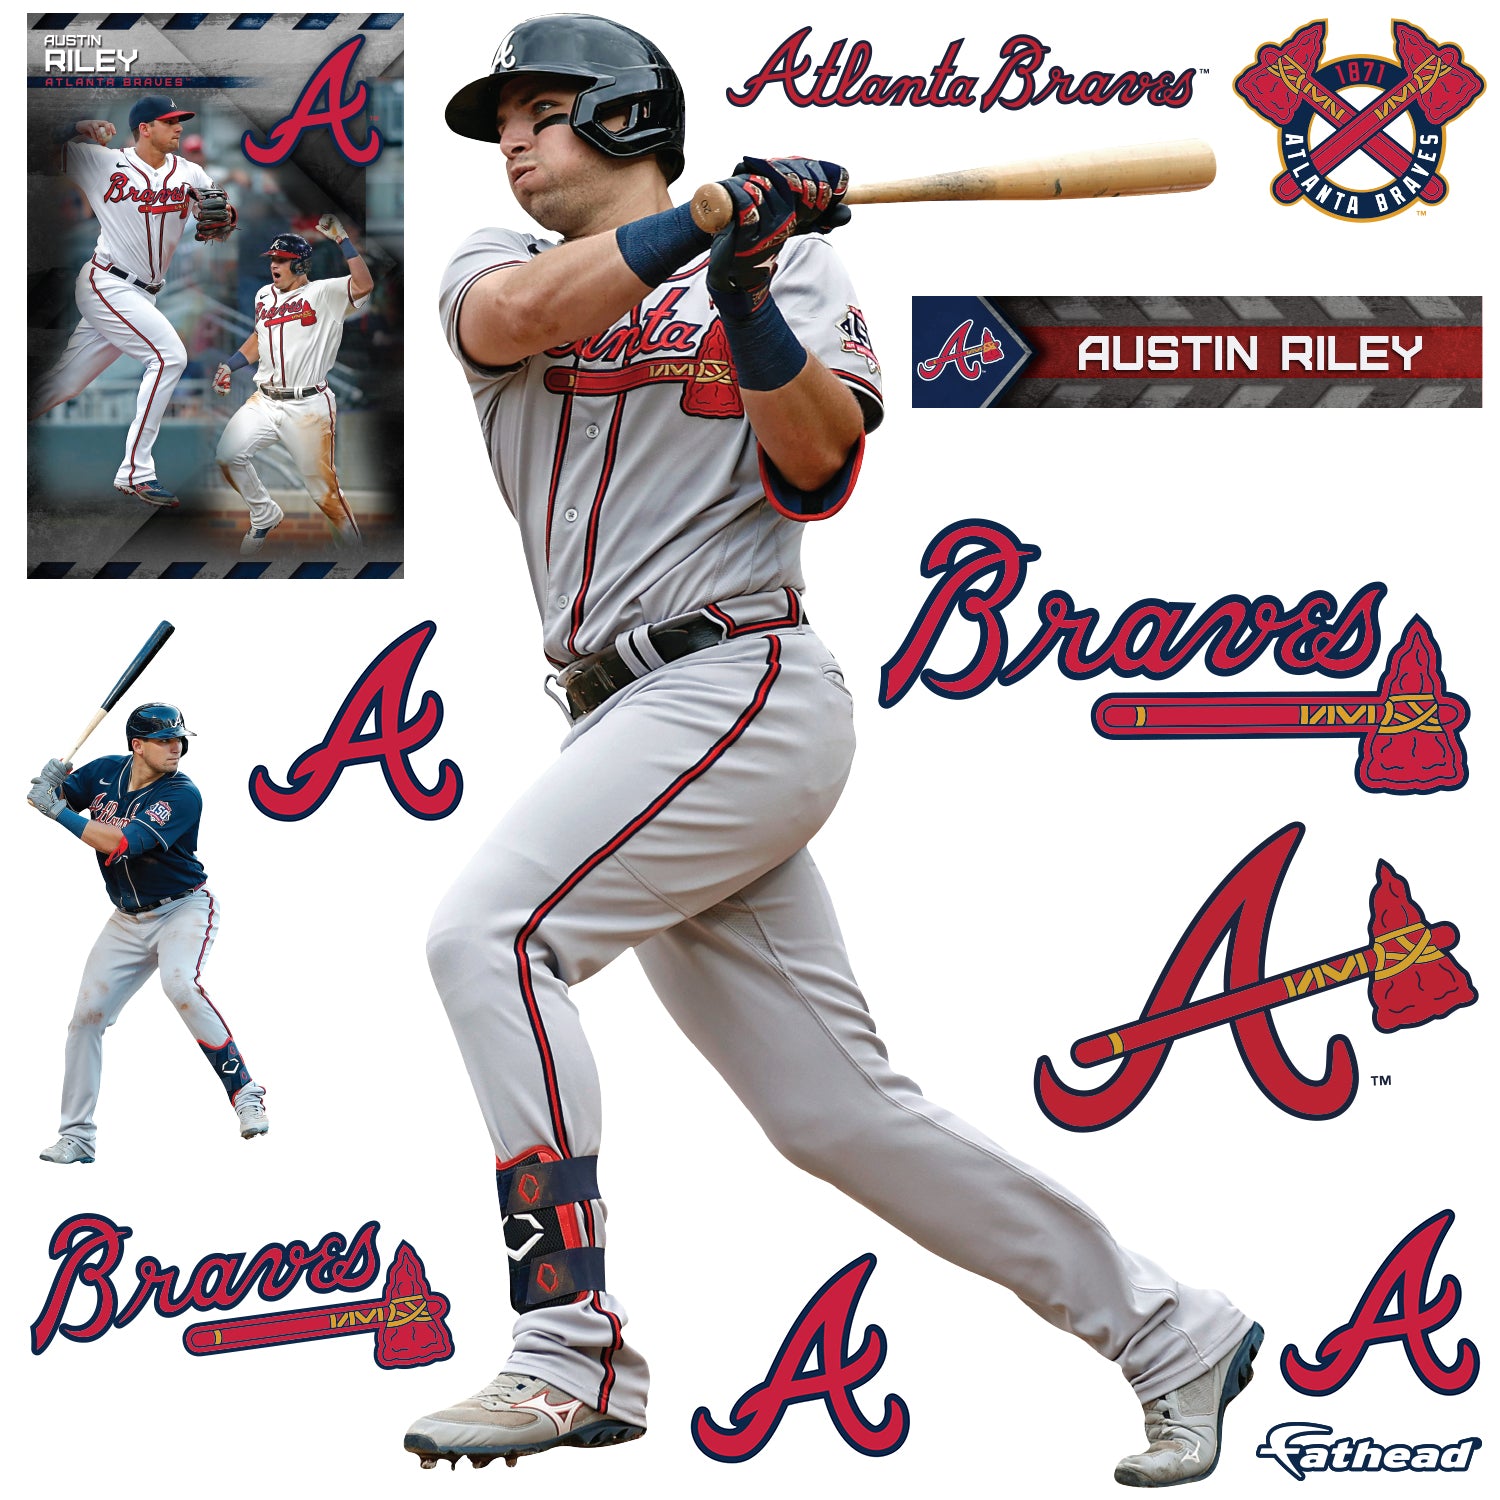 2021 Atlanta Braves Season in Review: Austin Riley - Battery Power